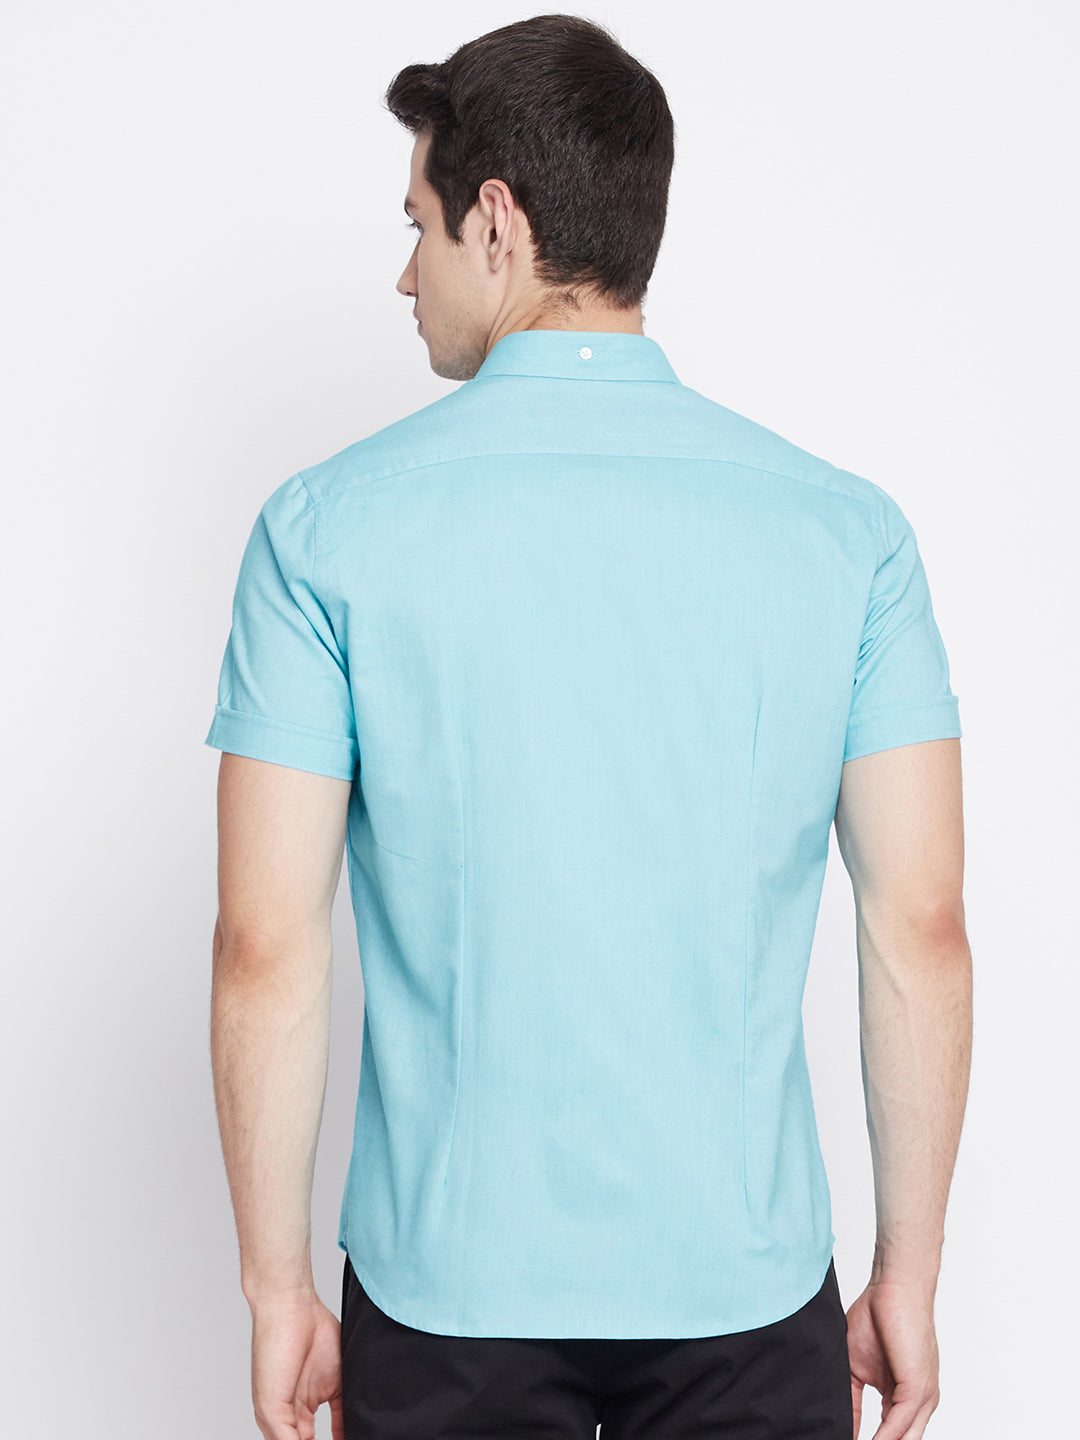 Turquoise Blue Oxford Cotton Half Sleeve Shirt